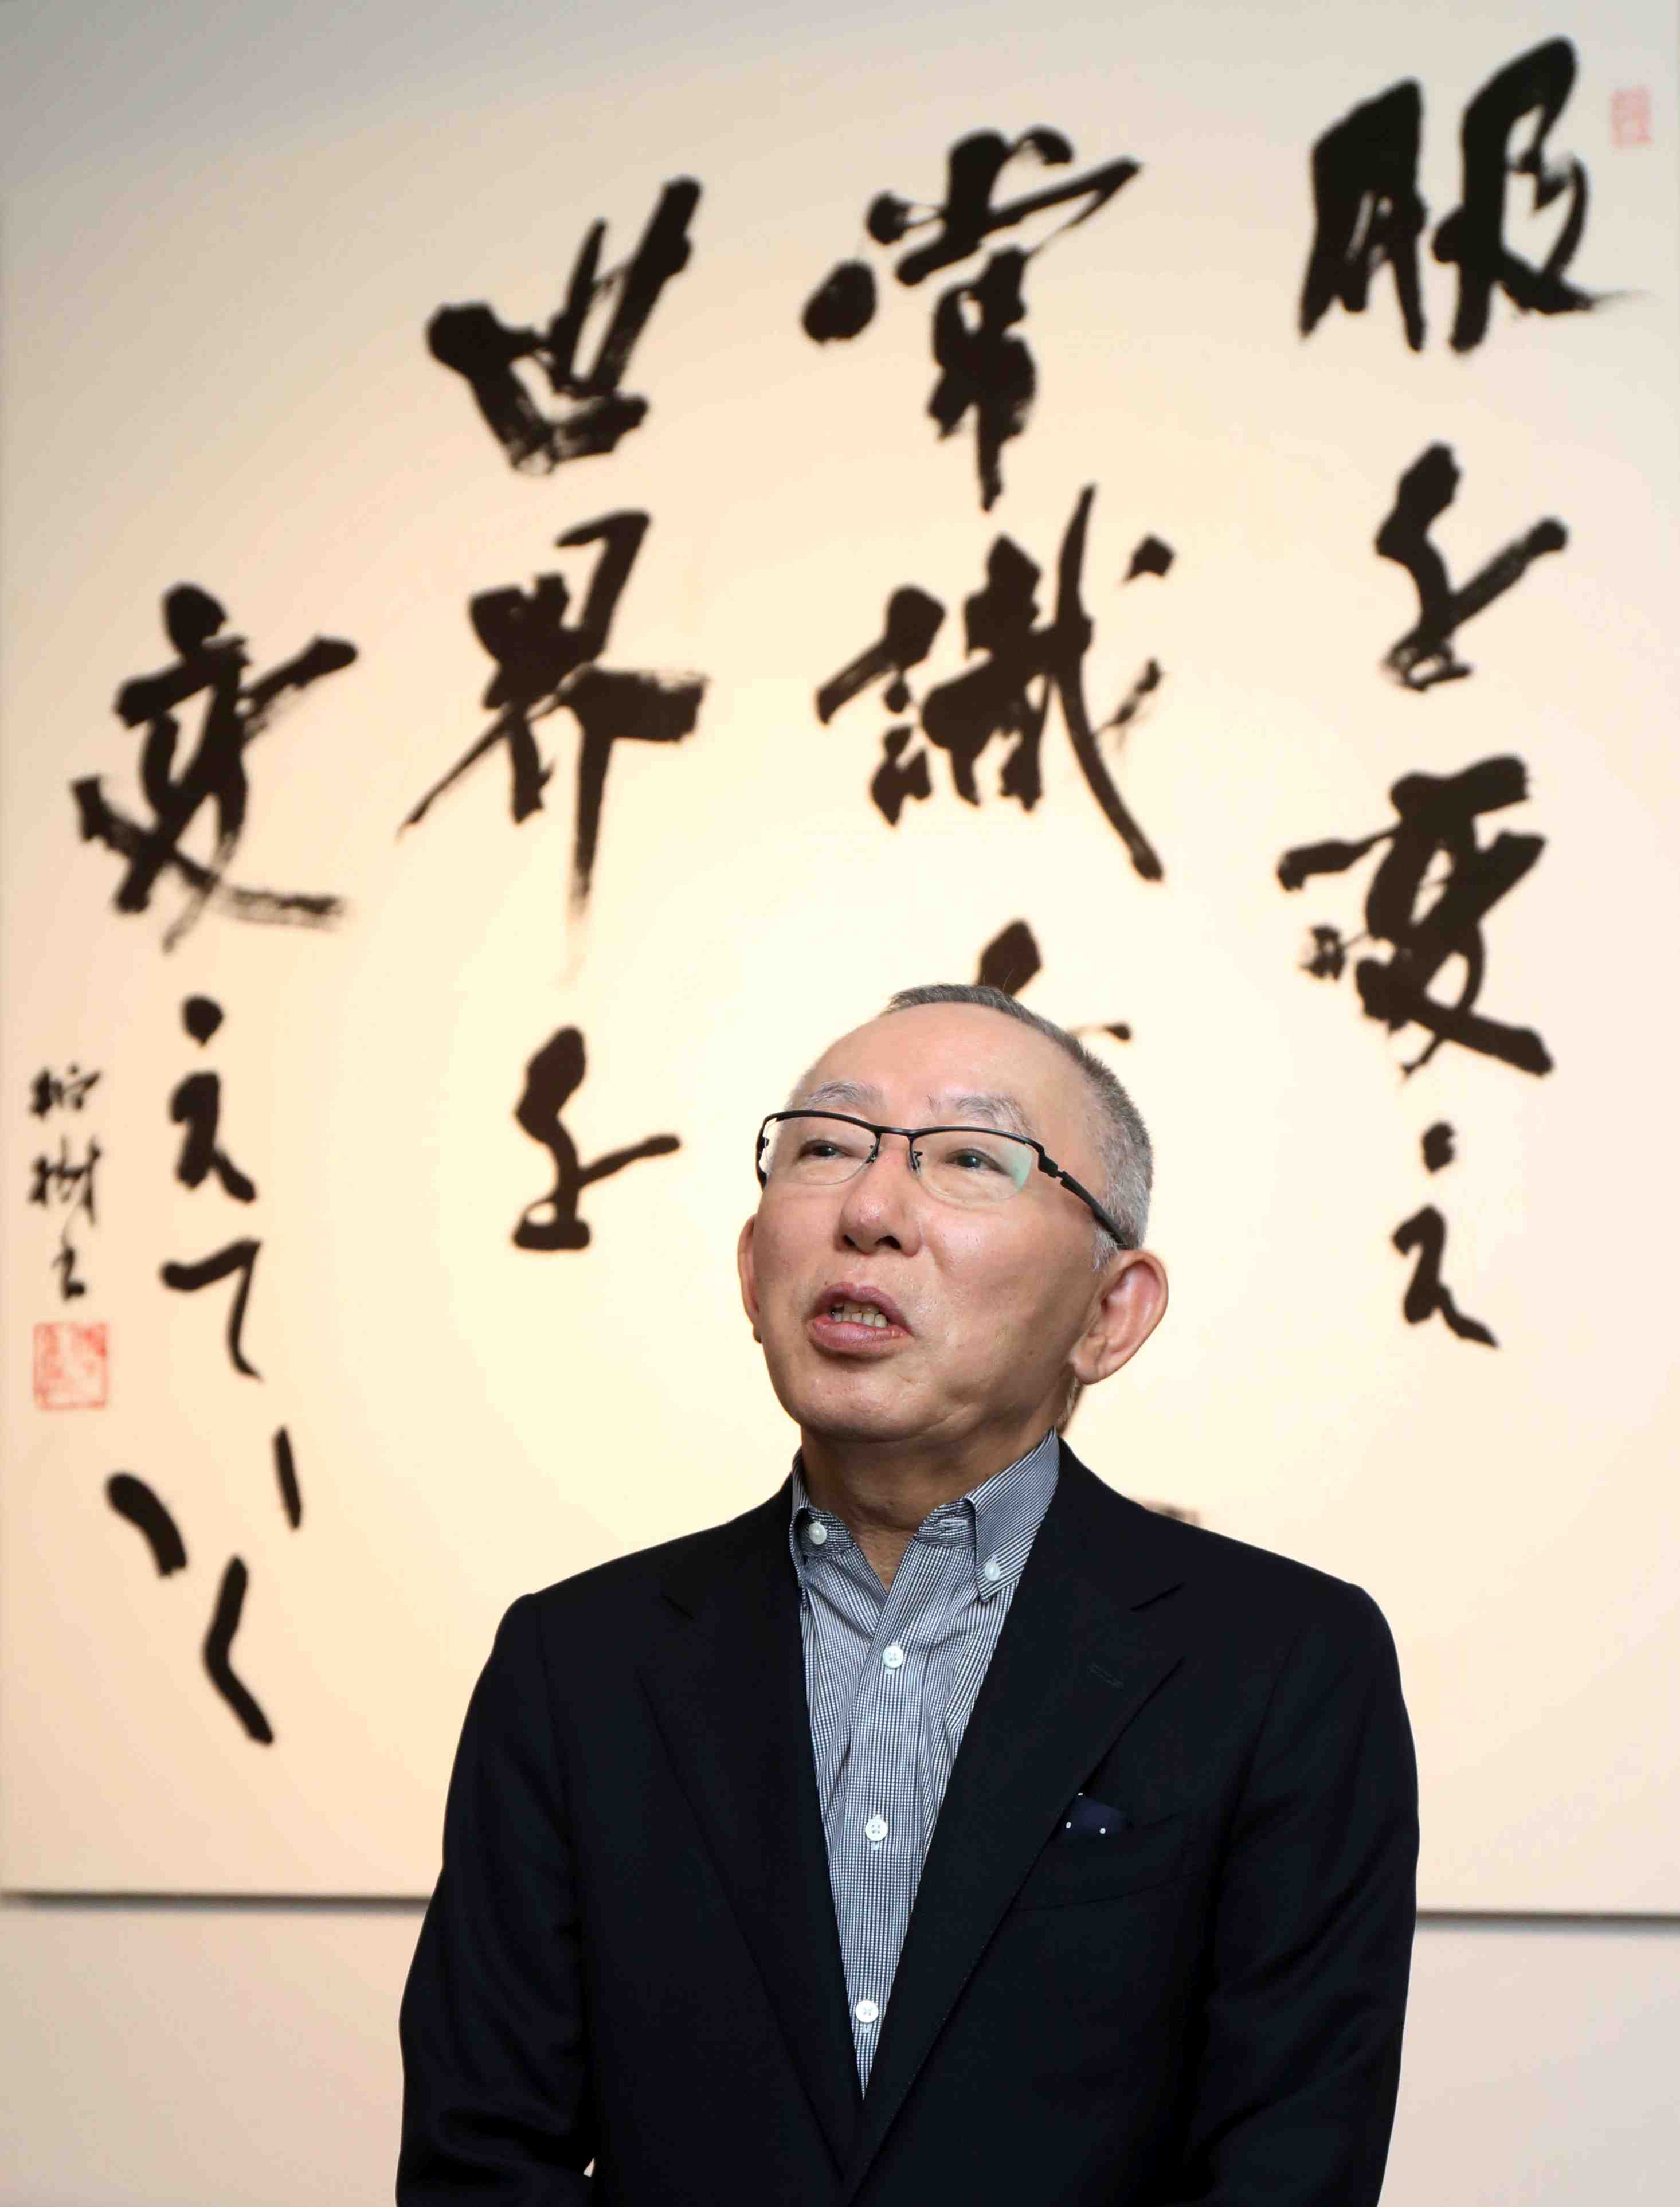 Interview with Tadashi Yanai UNIQLO Founder